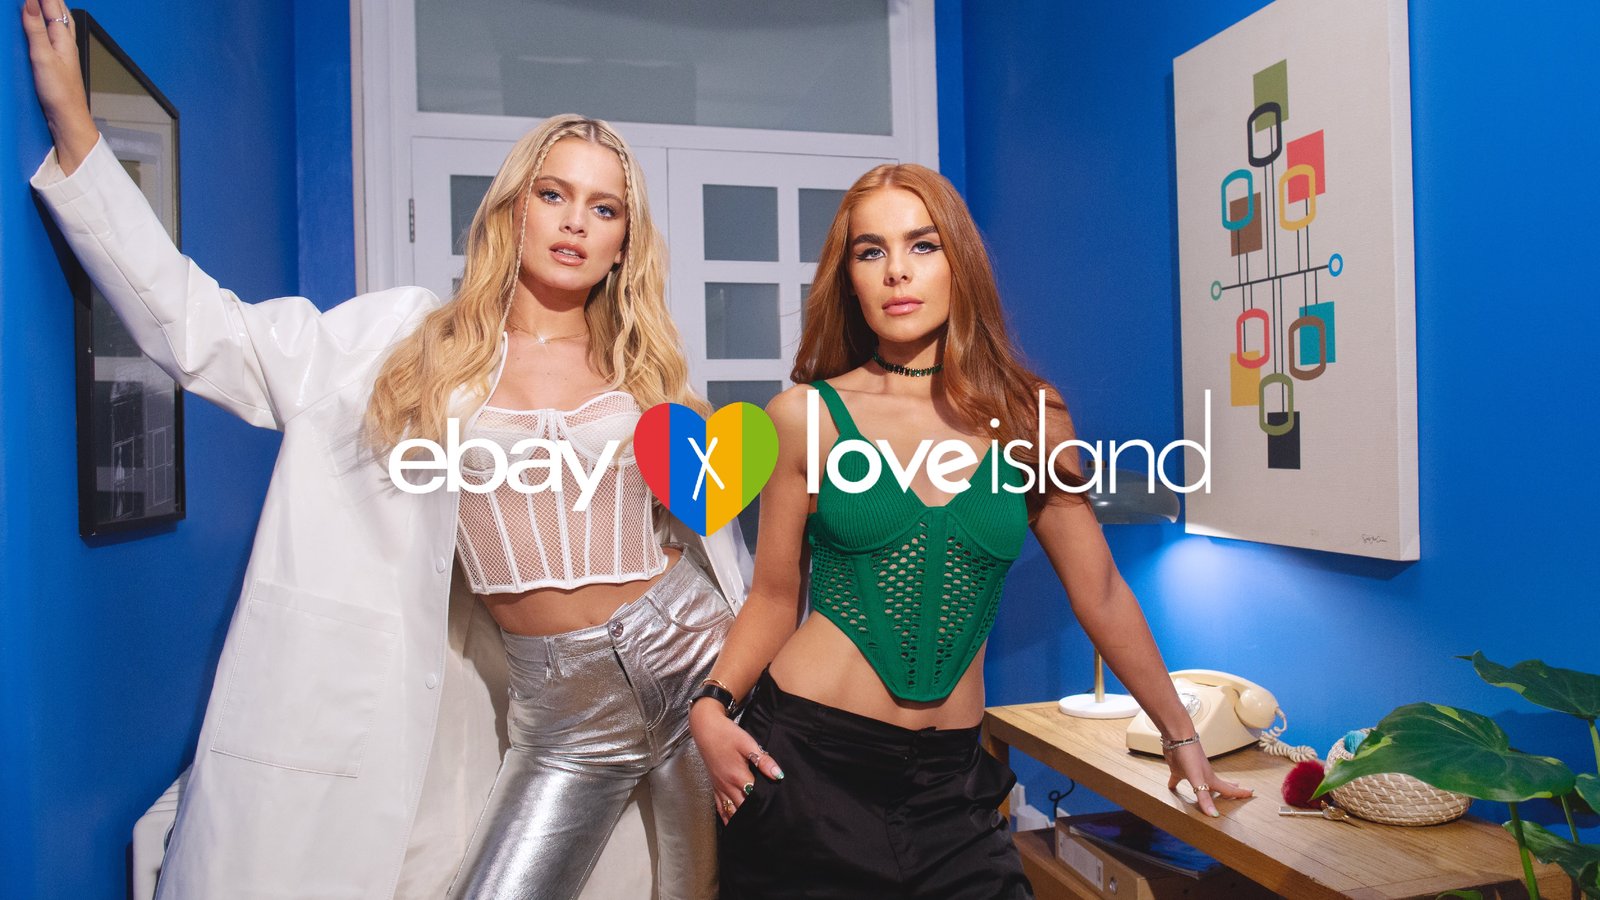 Ebay UK extends Love Island pre-loved partnership to All Star season